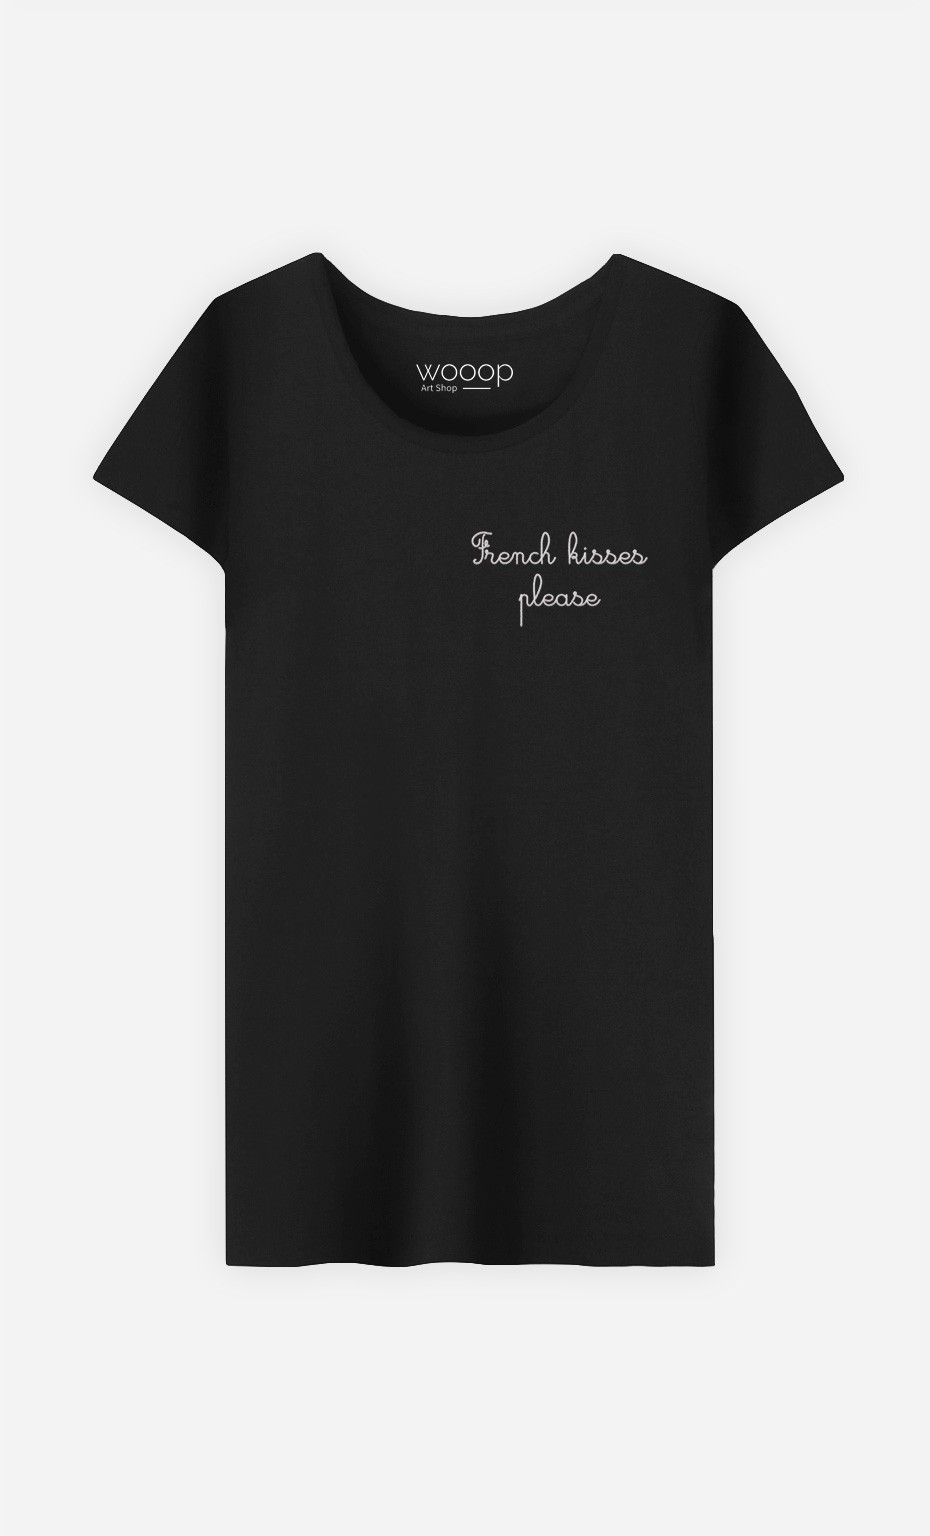 T-Shirt French Kisses Please - Brodé